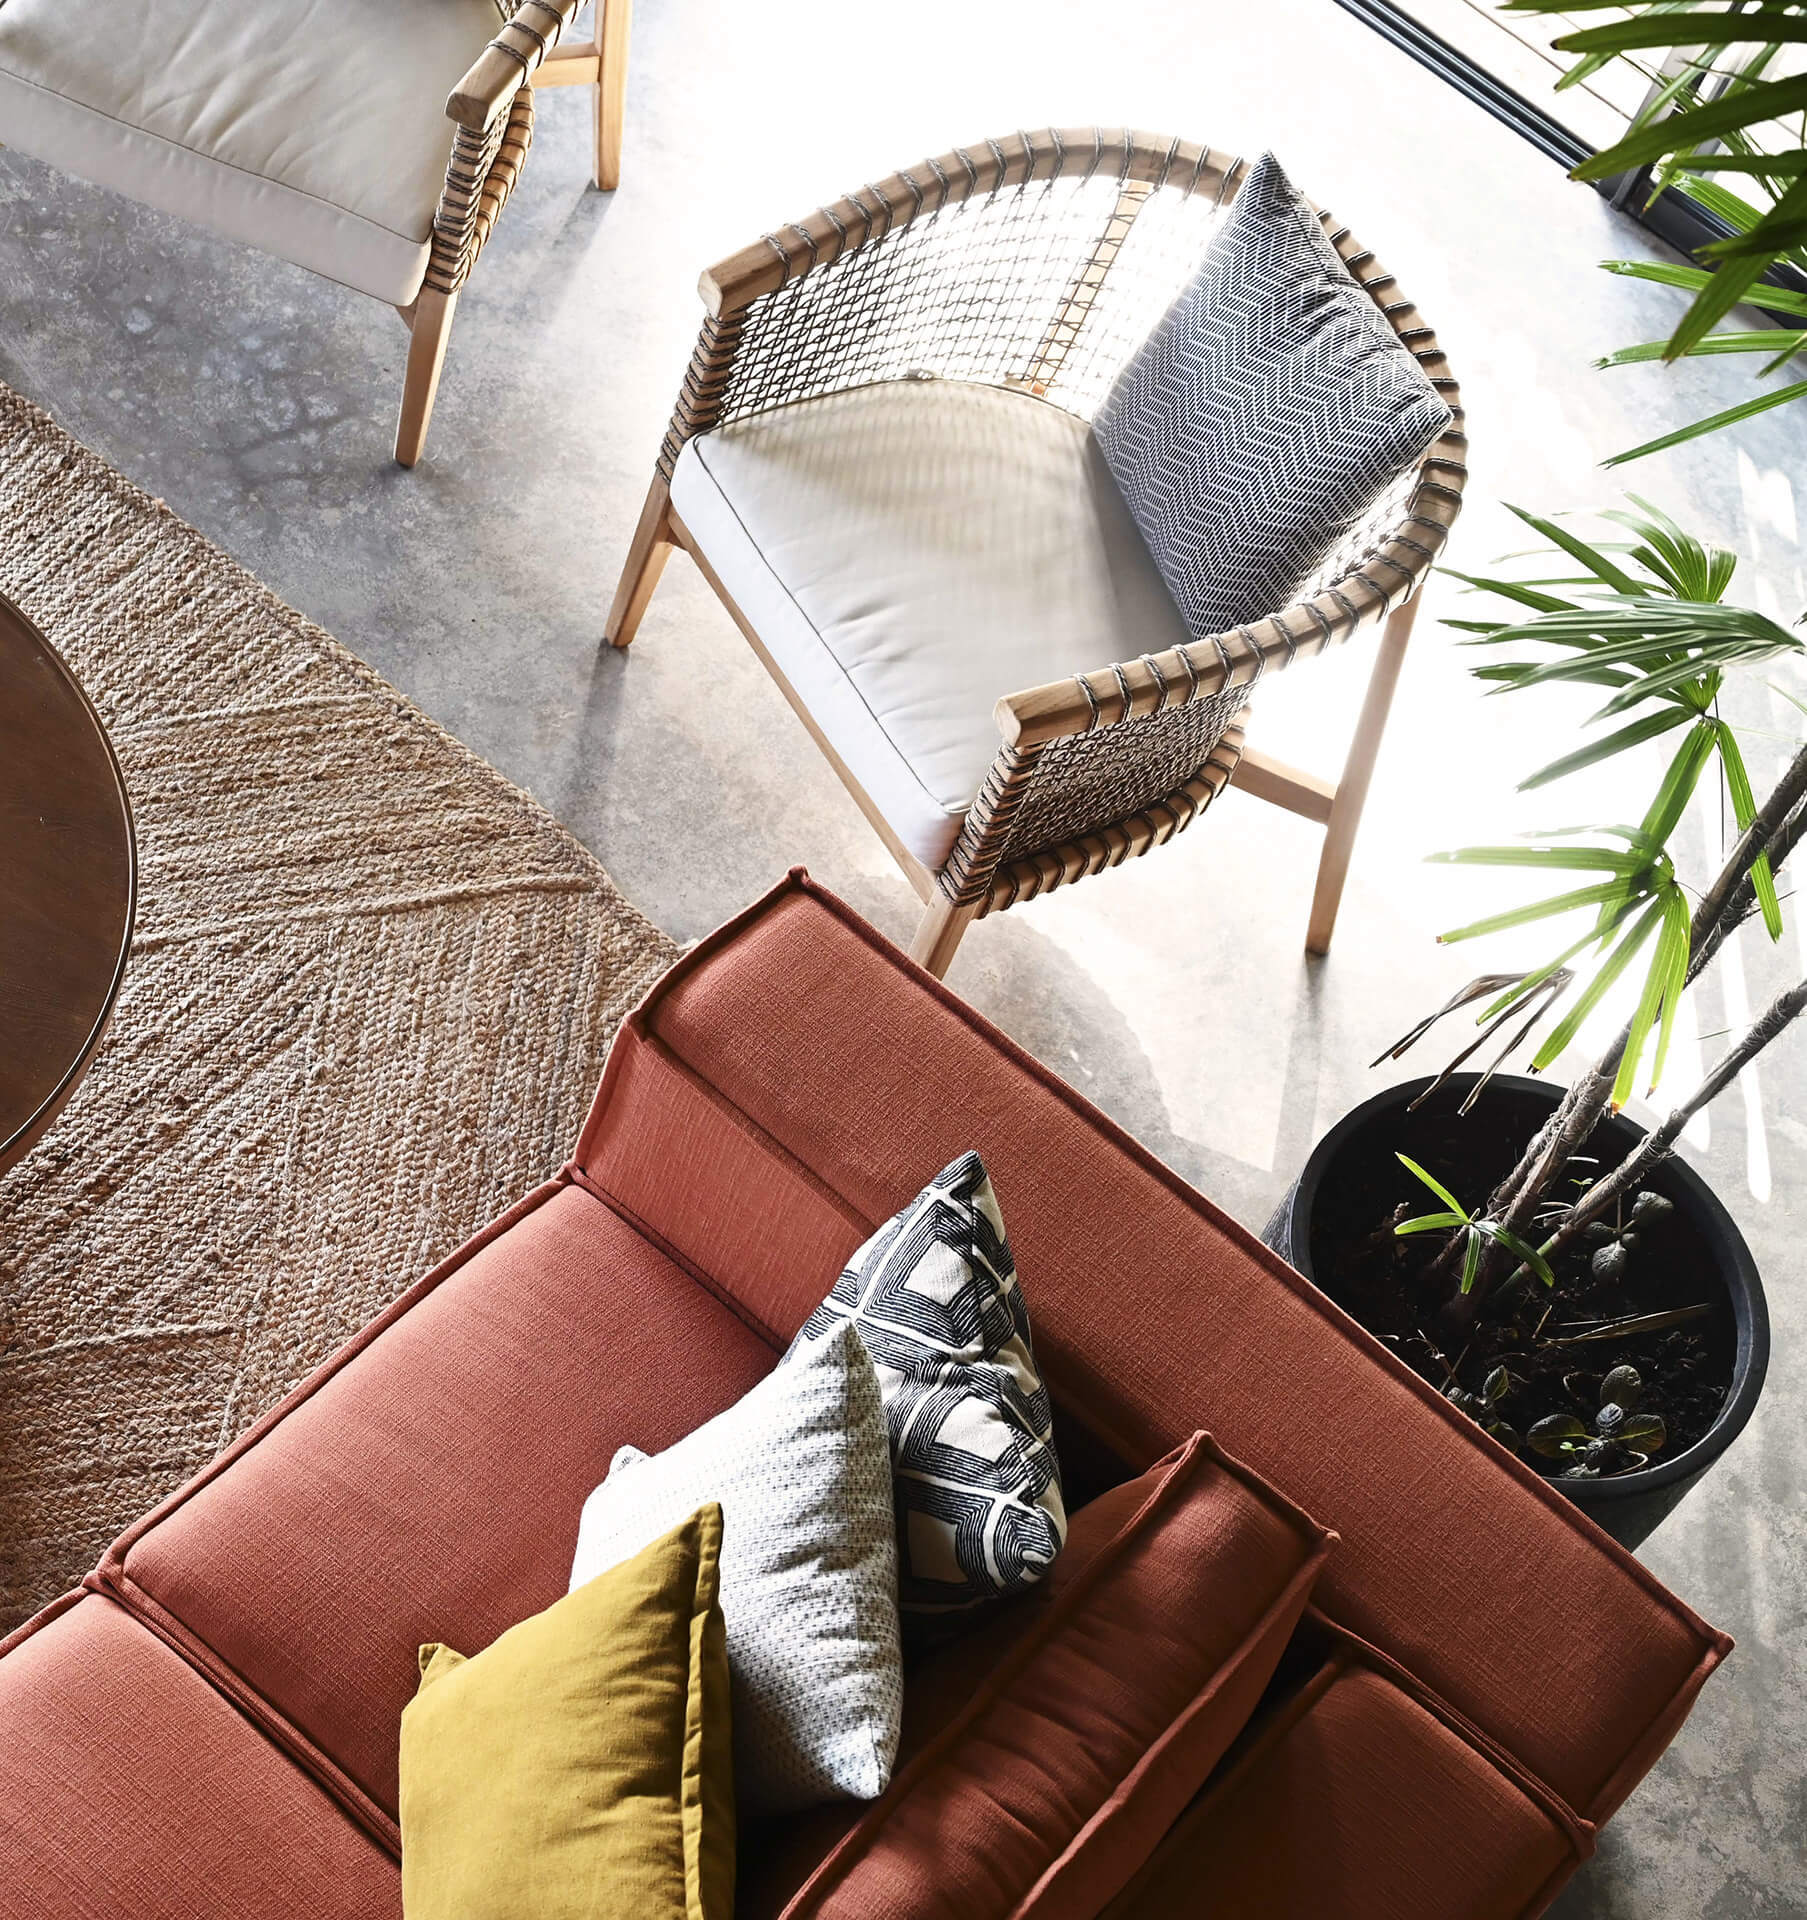 Interior design, Couch, Shoe, Plant, Property, Furniture, Comfort, Textile, Pillow, Wood